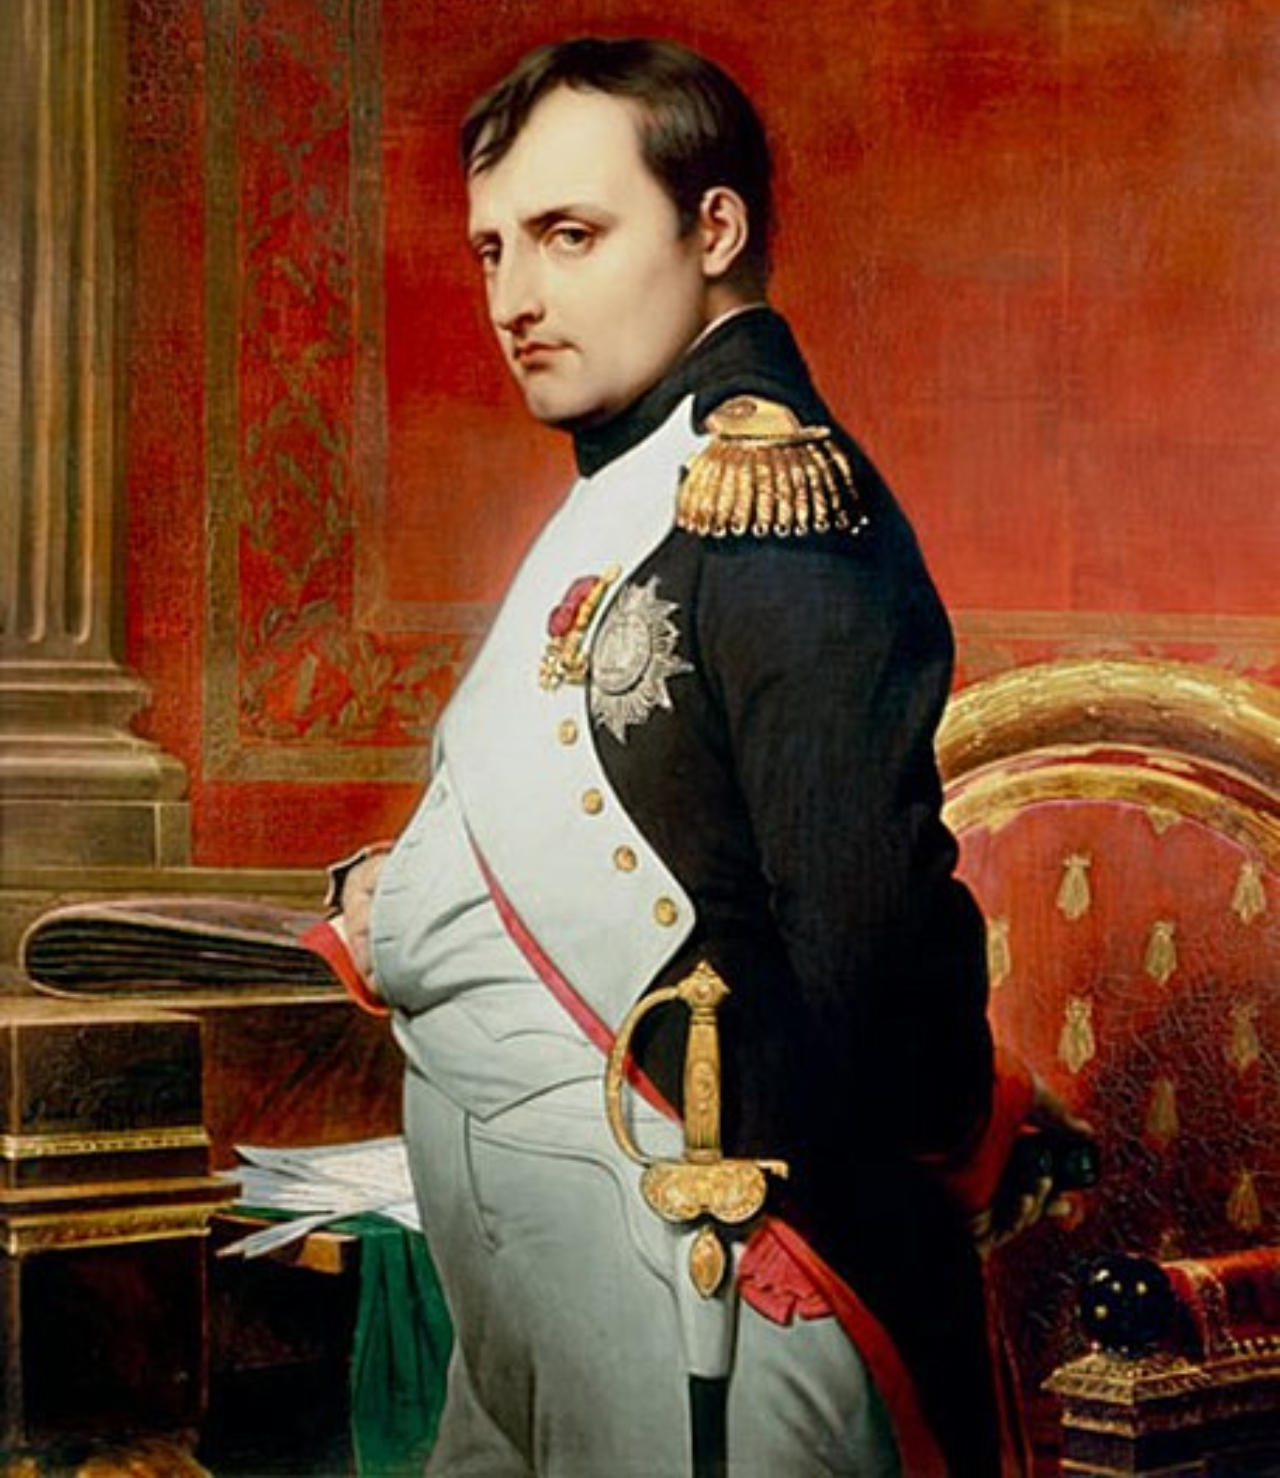 Retrato de Napoleão Bonaparte